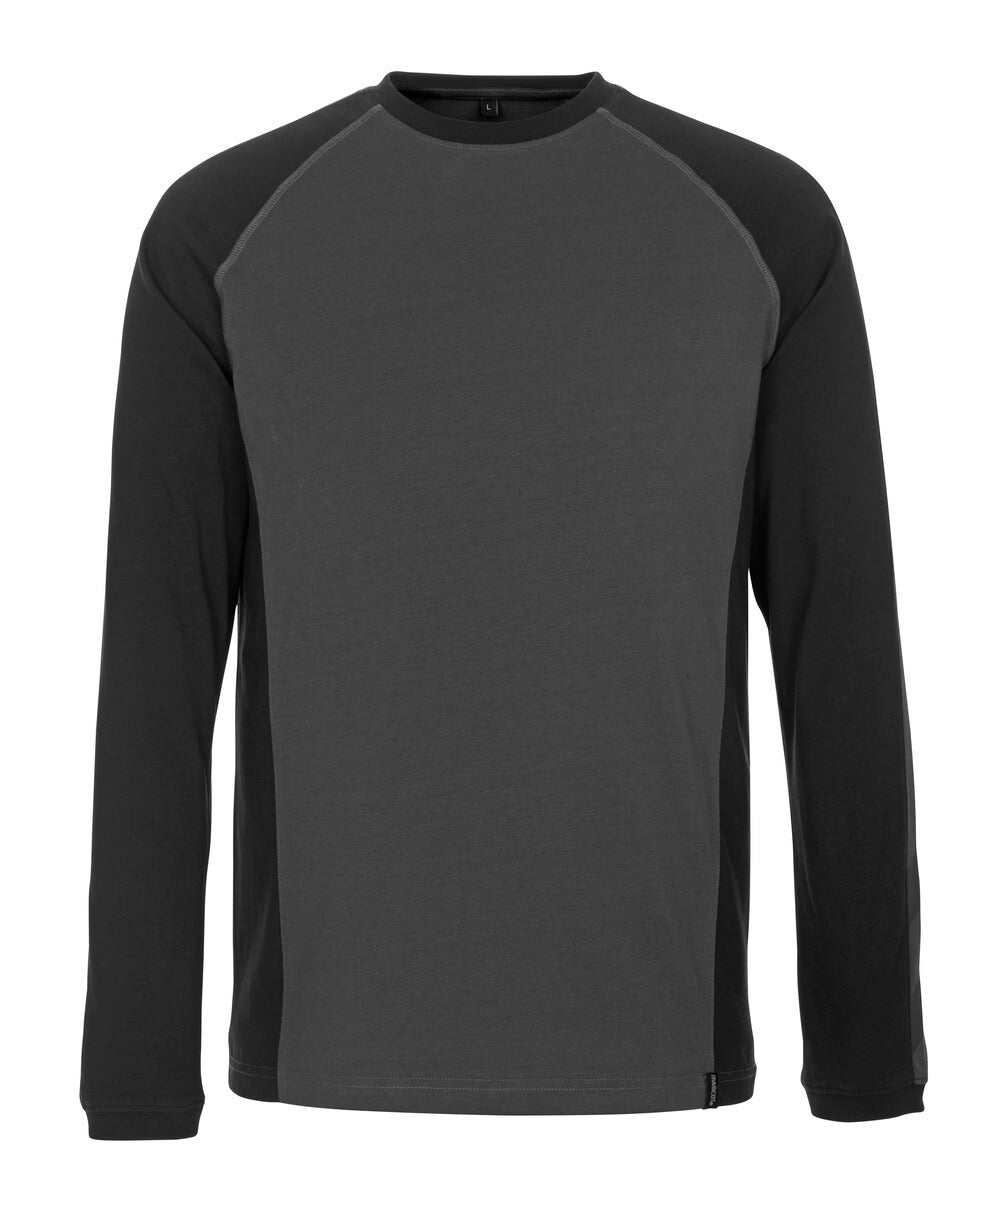 Mascot UNIQUE  Bielefeld T-shirt, long-sleeved 50568 dark anthracite/black